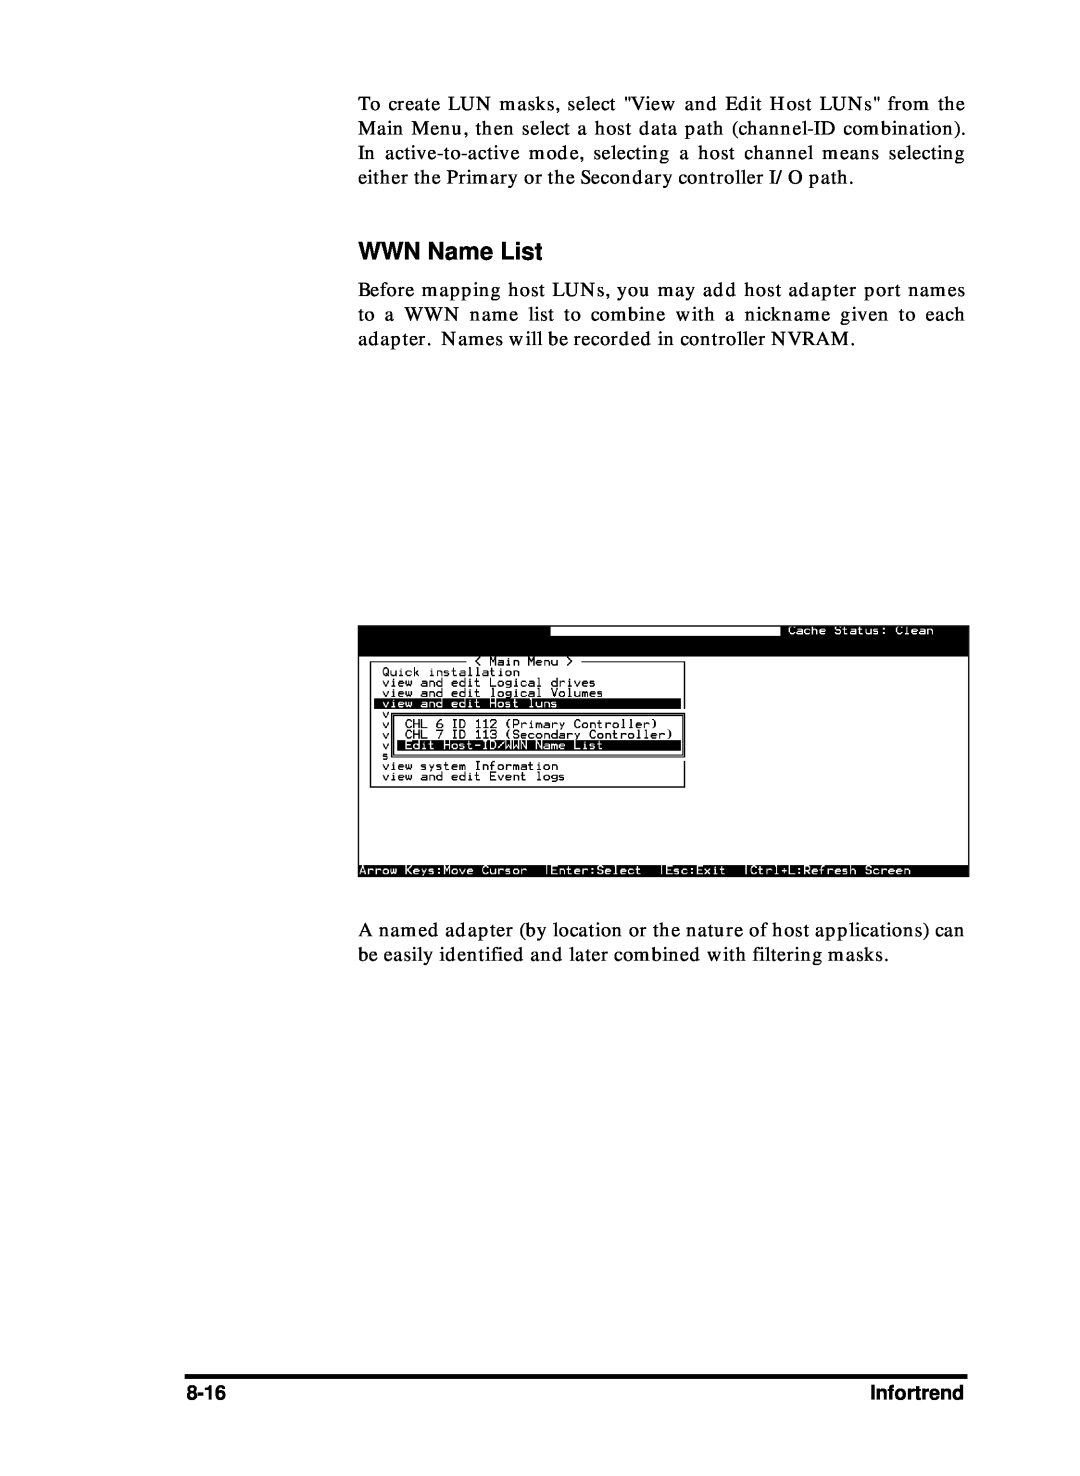 Compaq Infortrend manual WWN Name List 